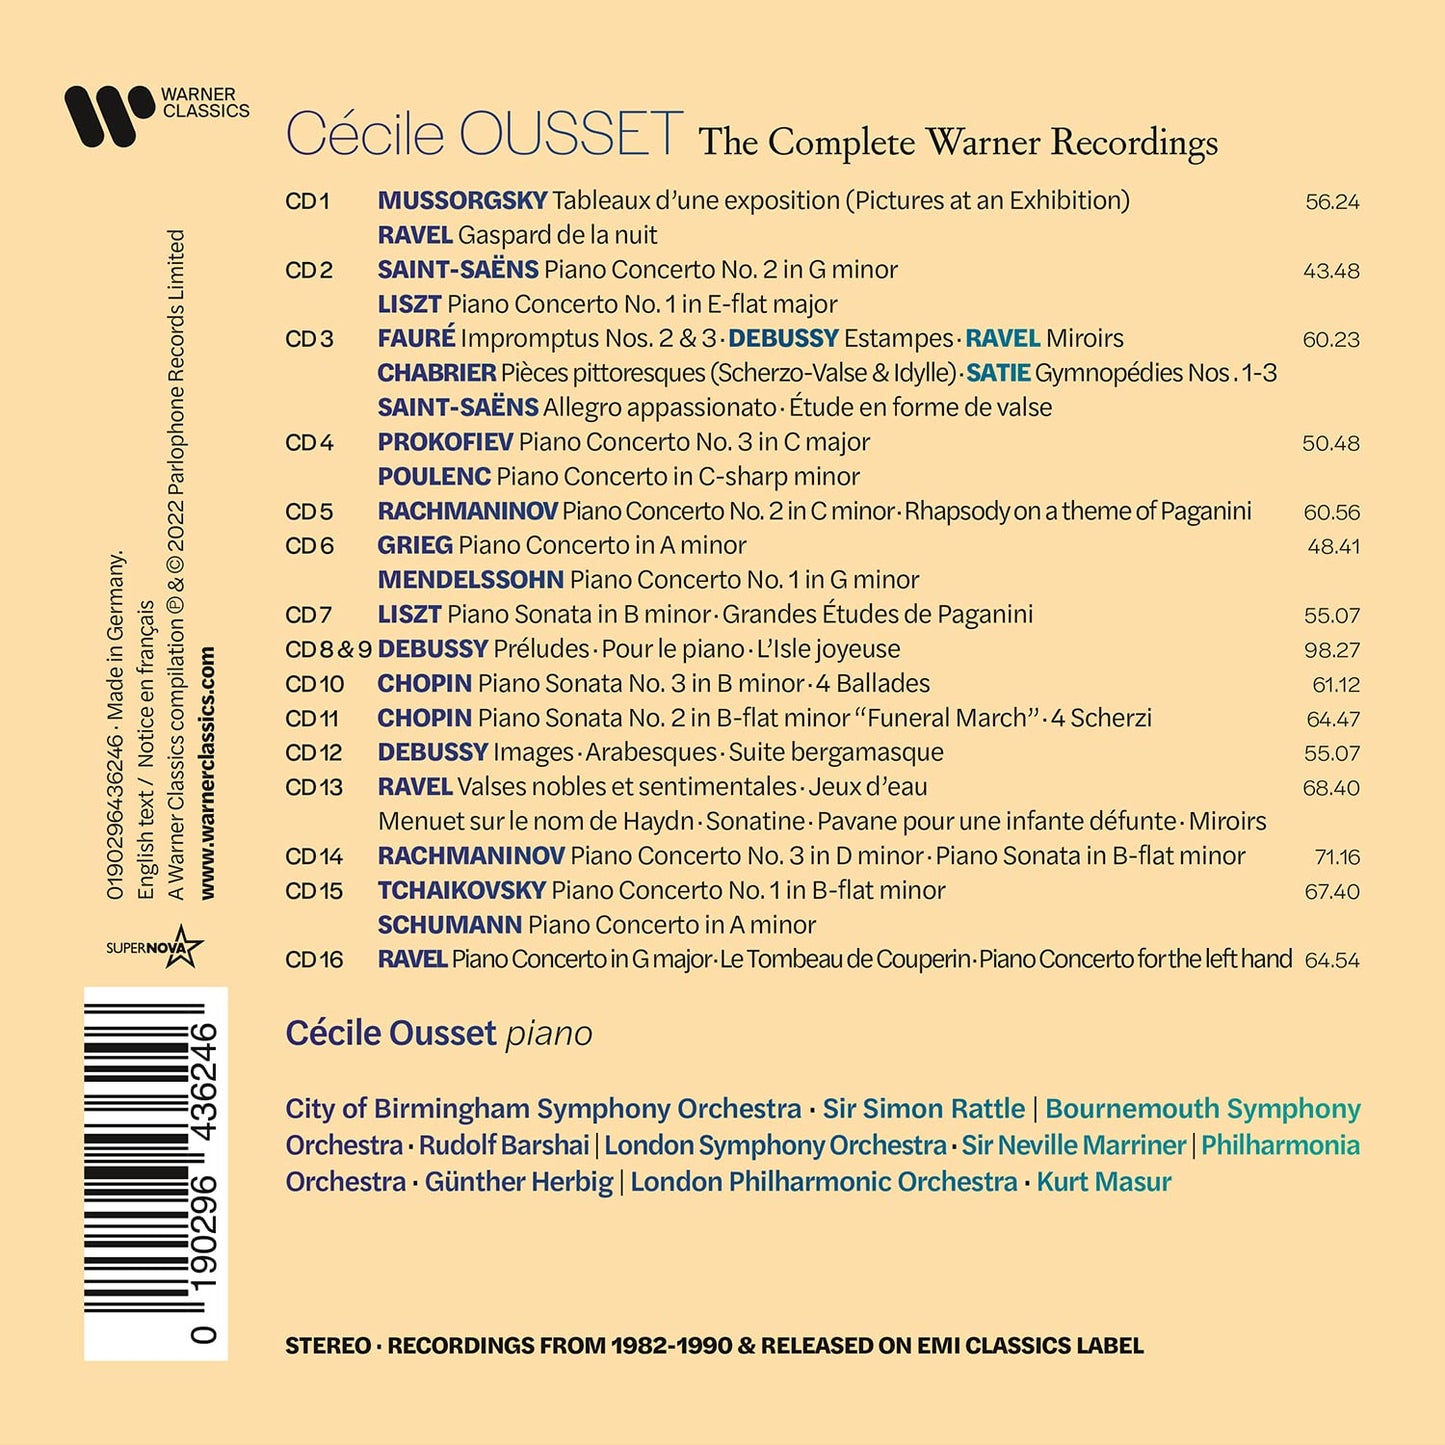 Cécile Ousset - The Complete Warner Recordings (16 CDs)